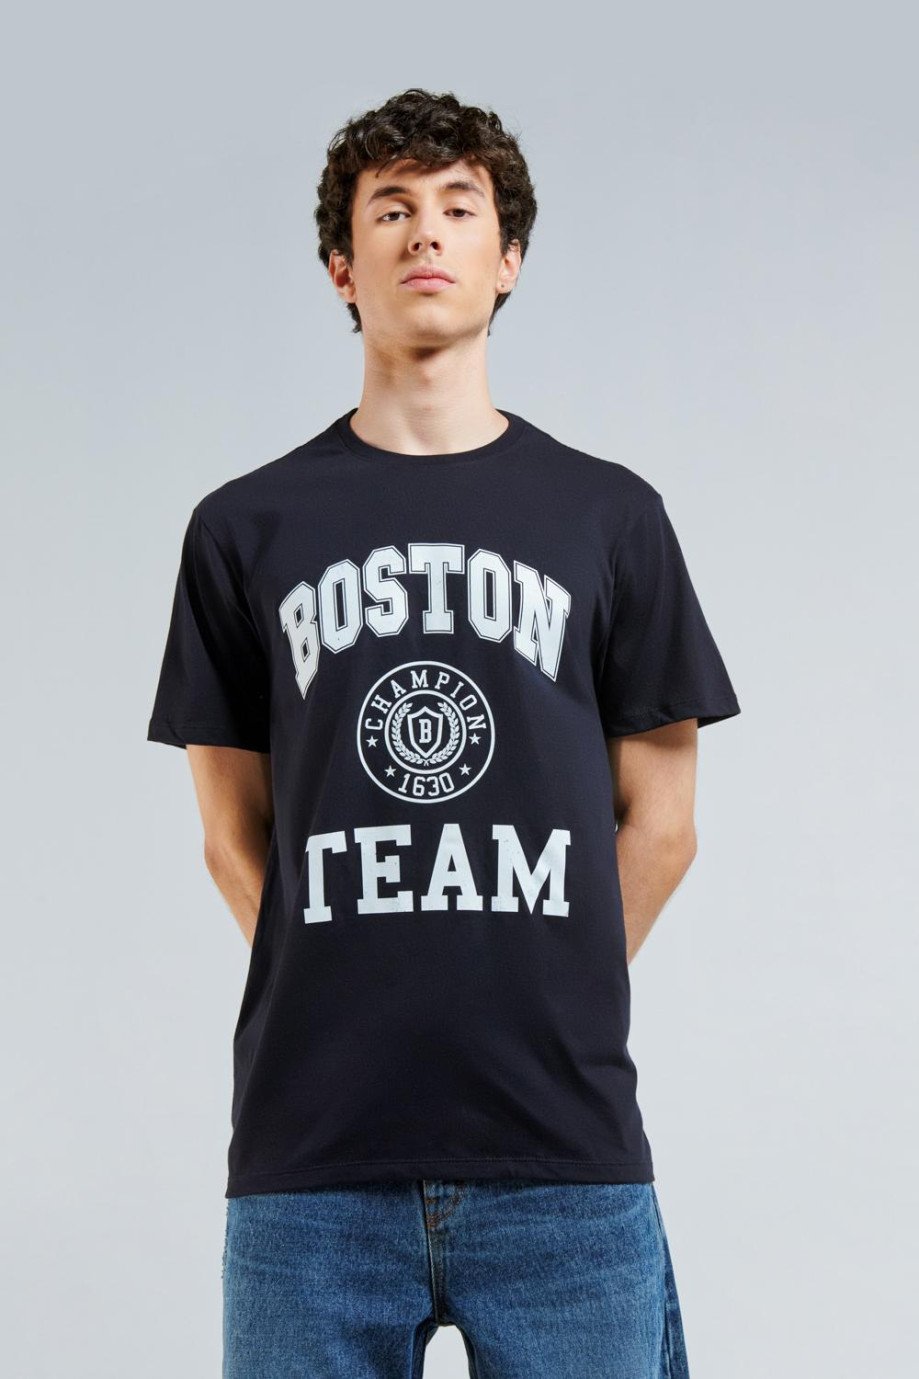 Camiseta unicolor con arte college de Boston y manga corta